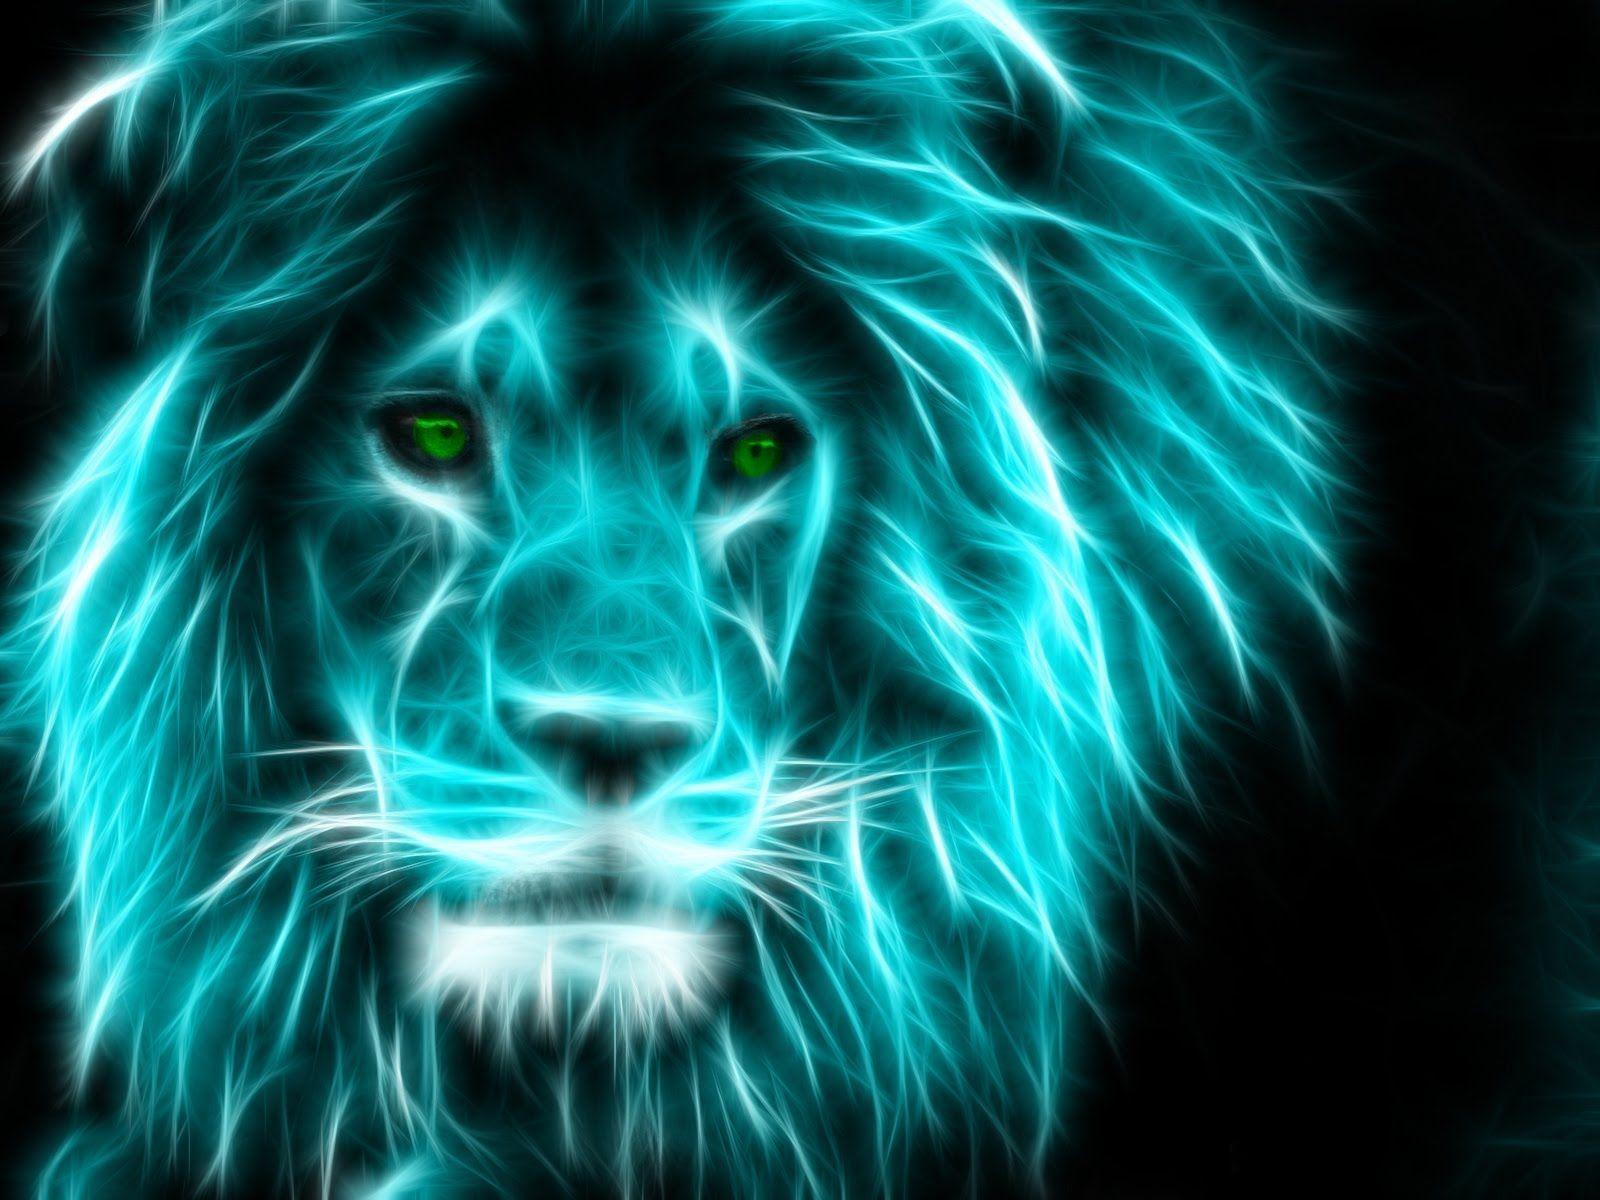 Green Lion Images - Free Download on Freepik